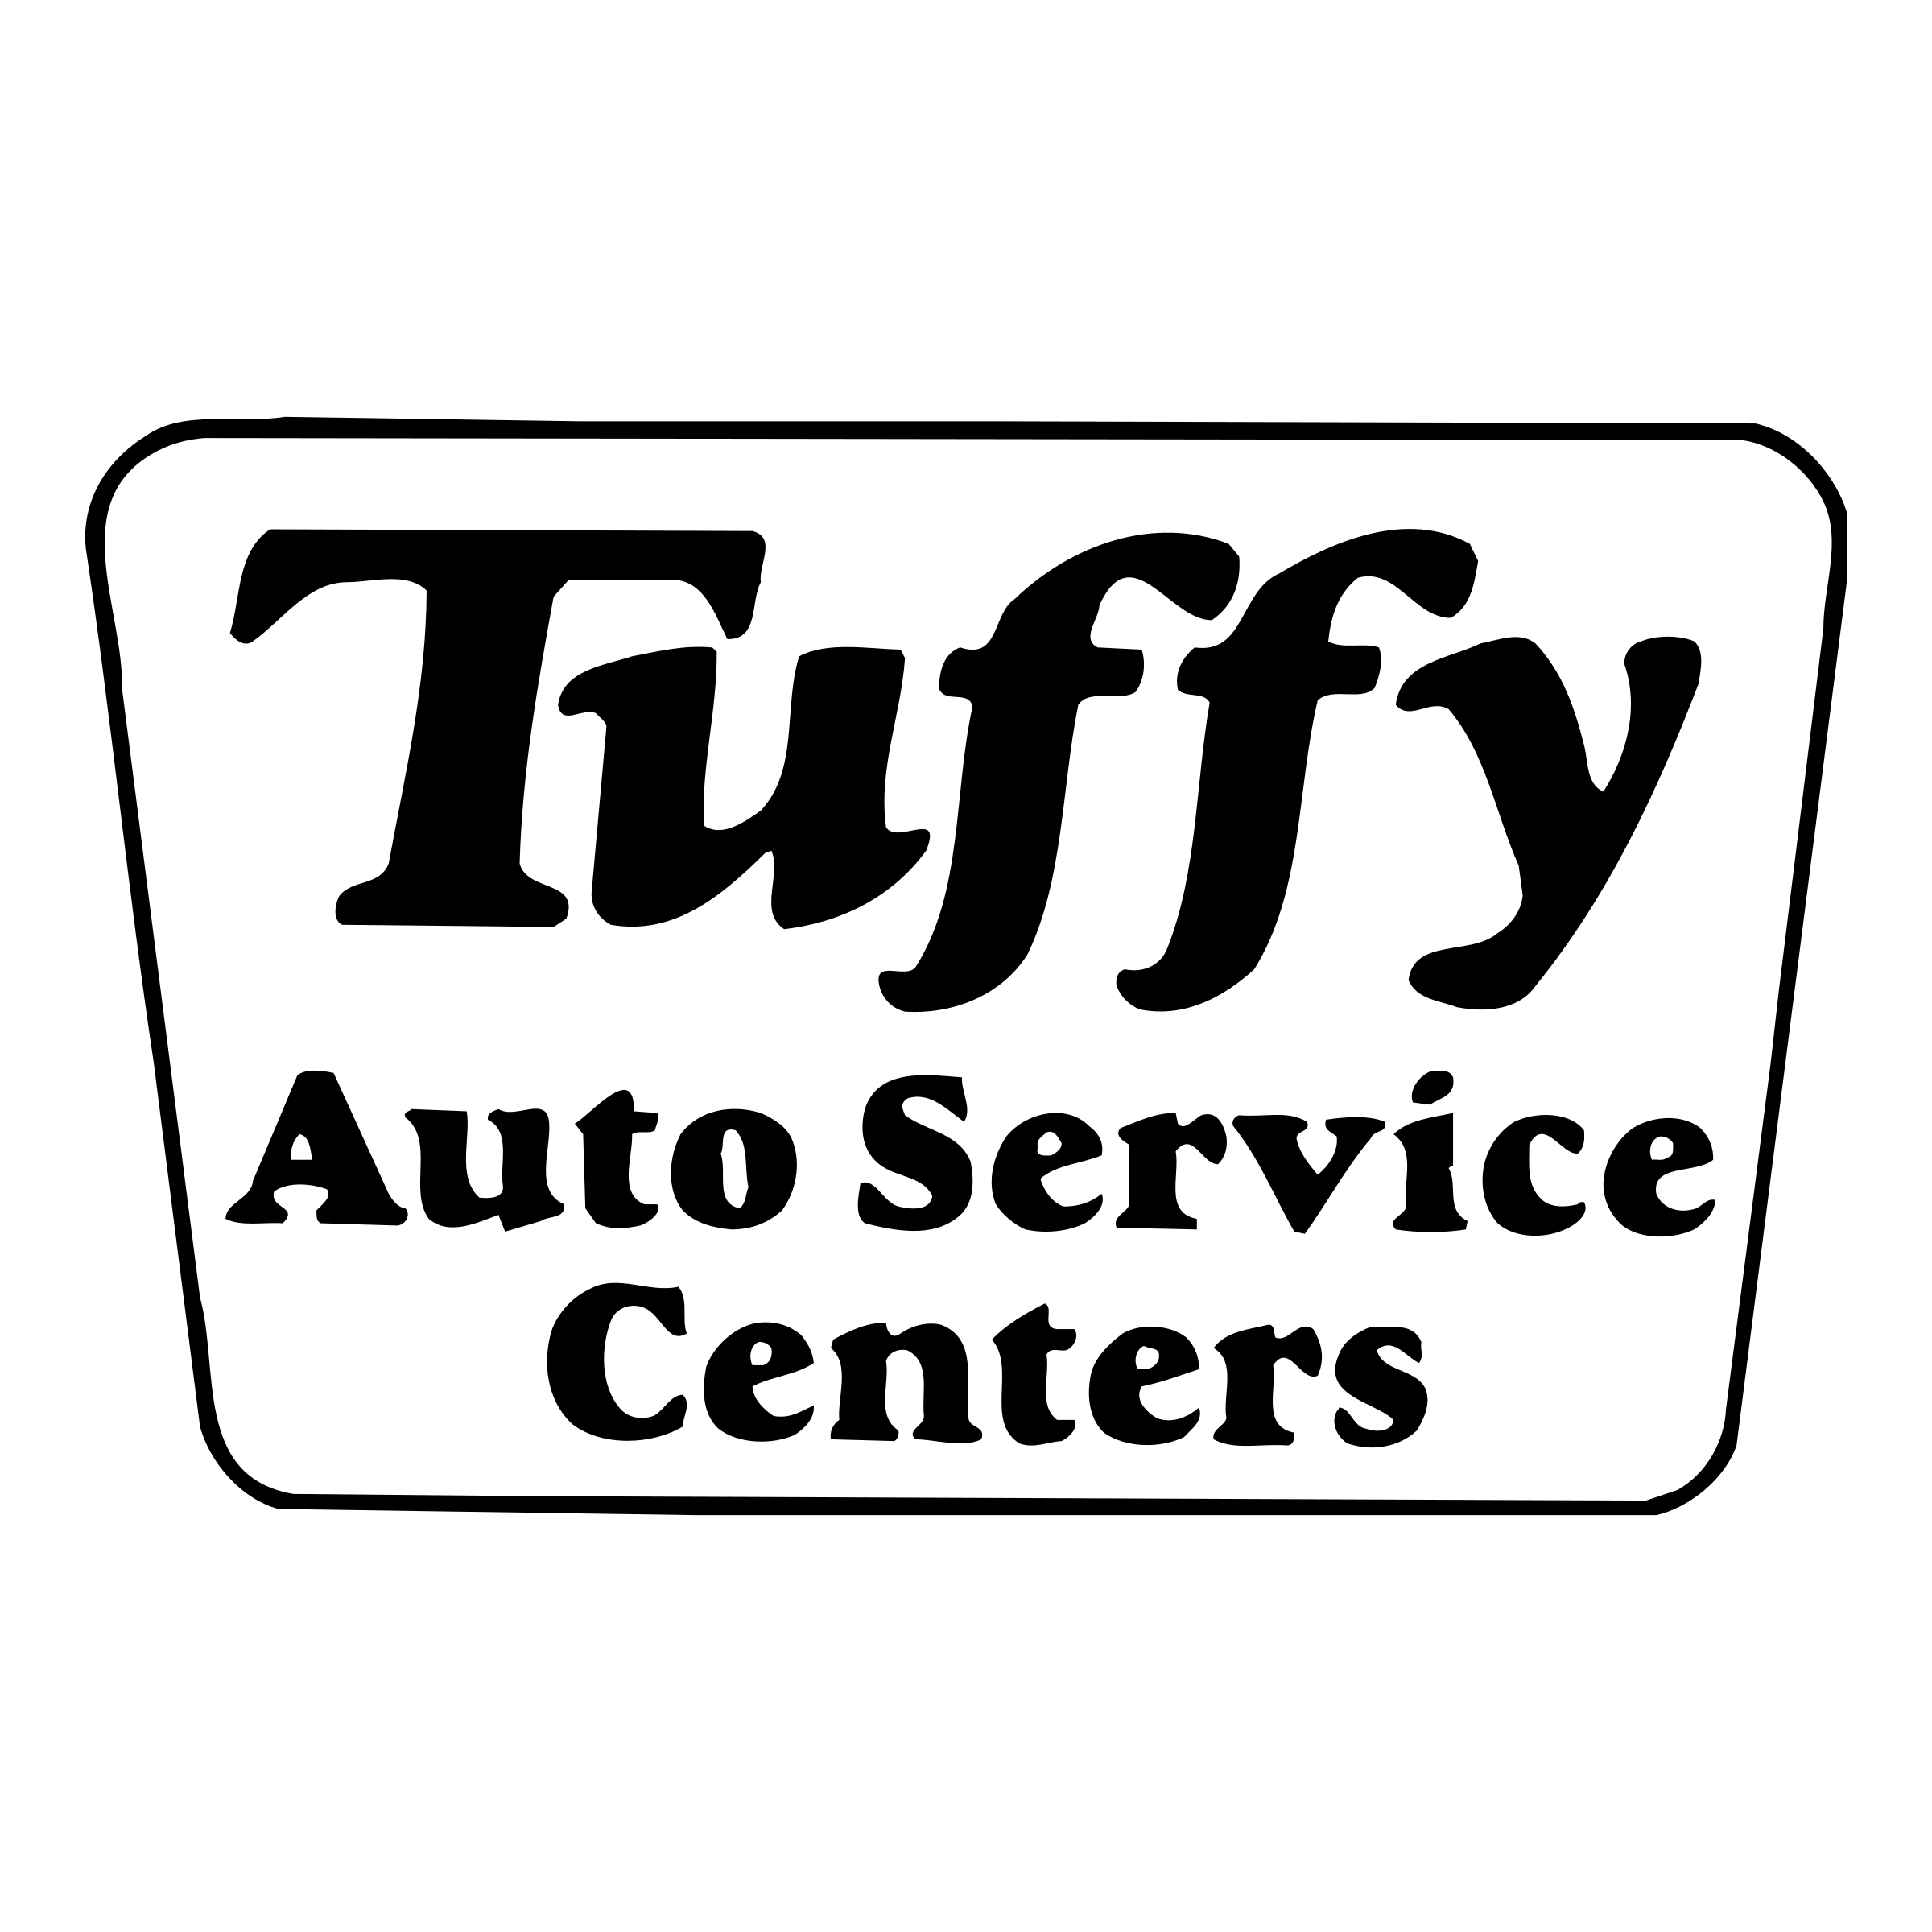 Tuffy Logo - Tuffy Logo PNG Transparent & SVG Vector - Freebie Supply